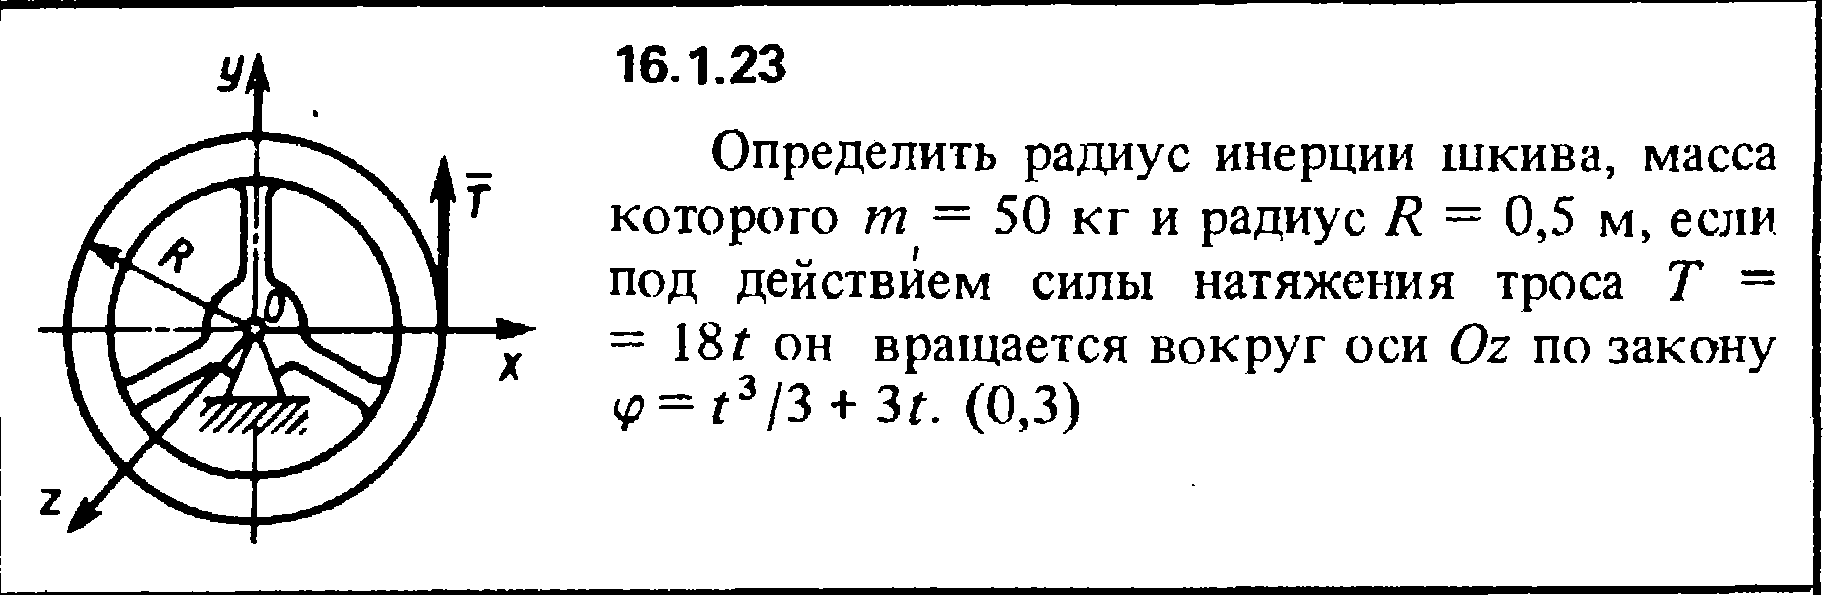 Решение задачи 16.1.23 из сборника Кепе О.Е. 1989 года